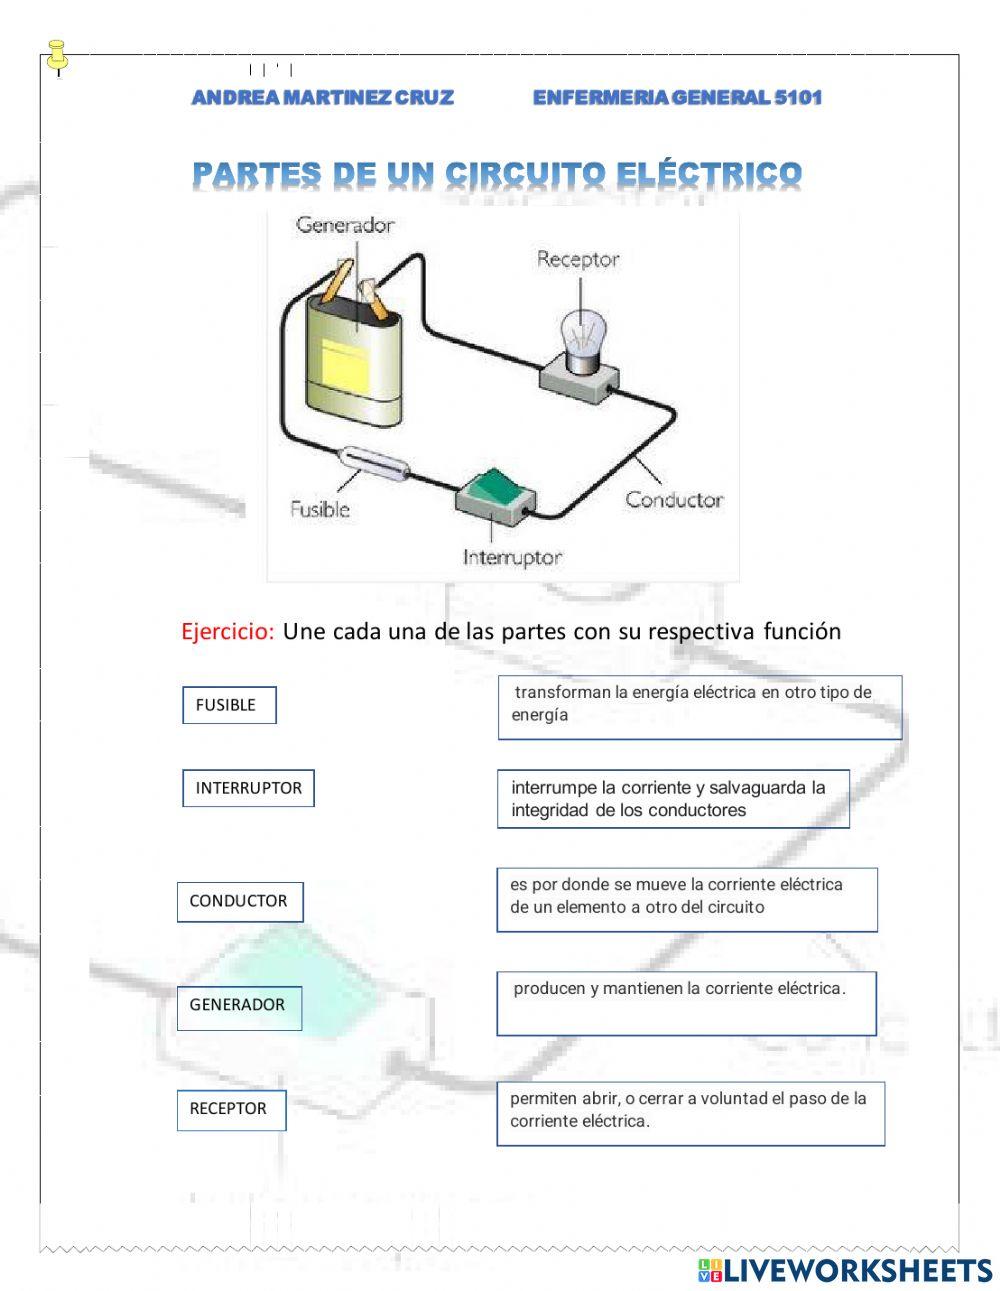 Partes de un circuito electrico